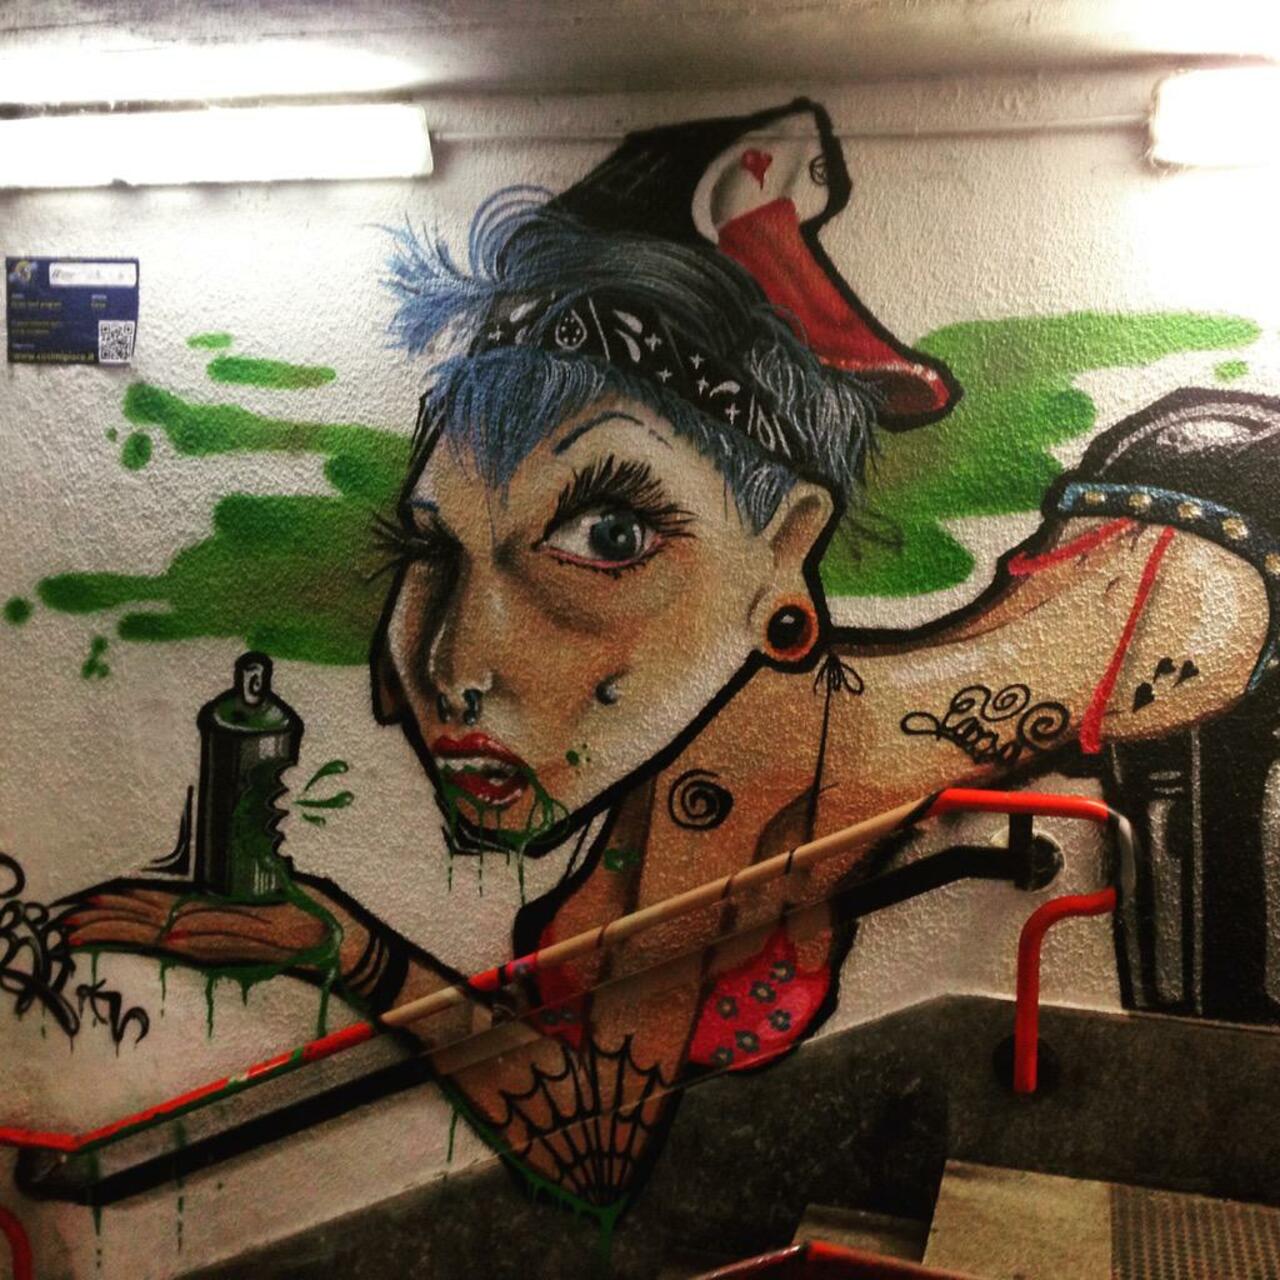 #streetart #murales #graffitiart #milano #graffiti #portagenova http://t.co/Sqy9uspfkb